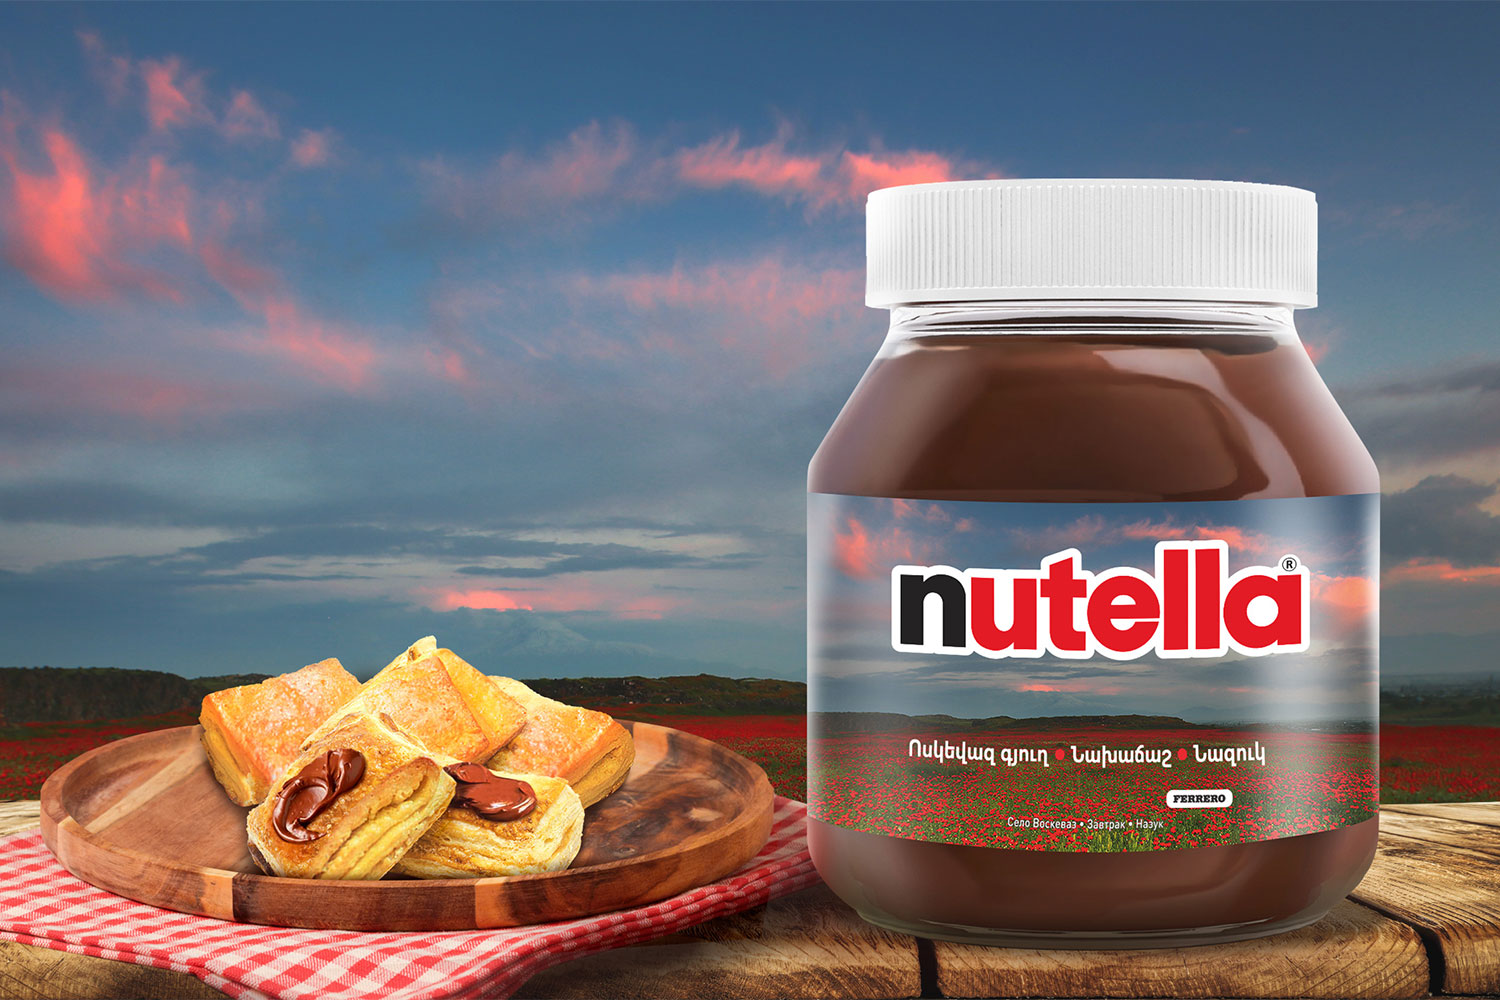 An inspiring journey through Armenia with Nutella